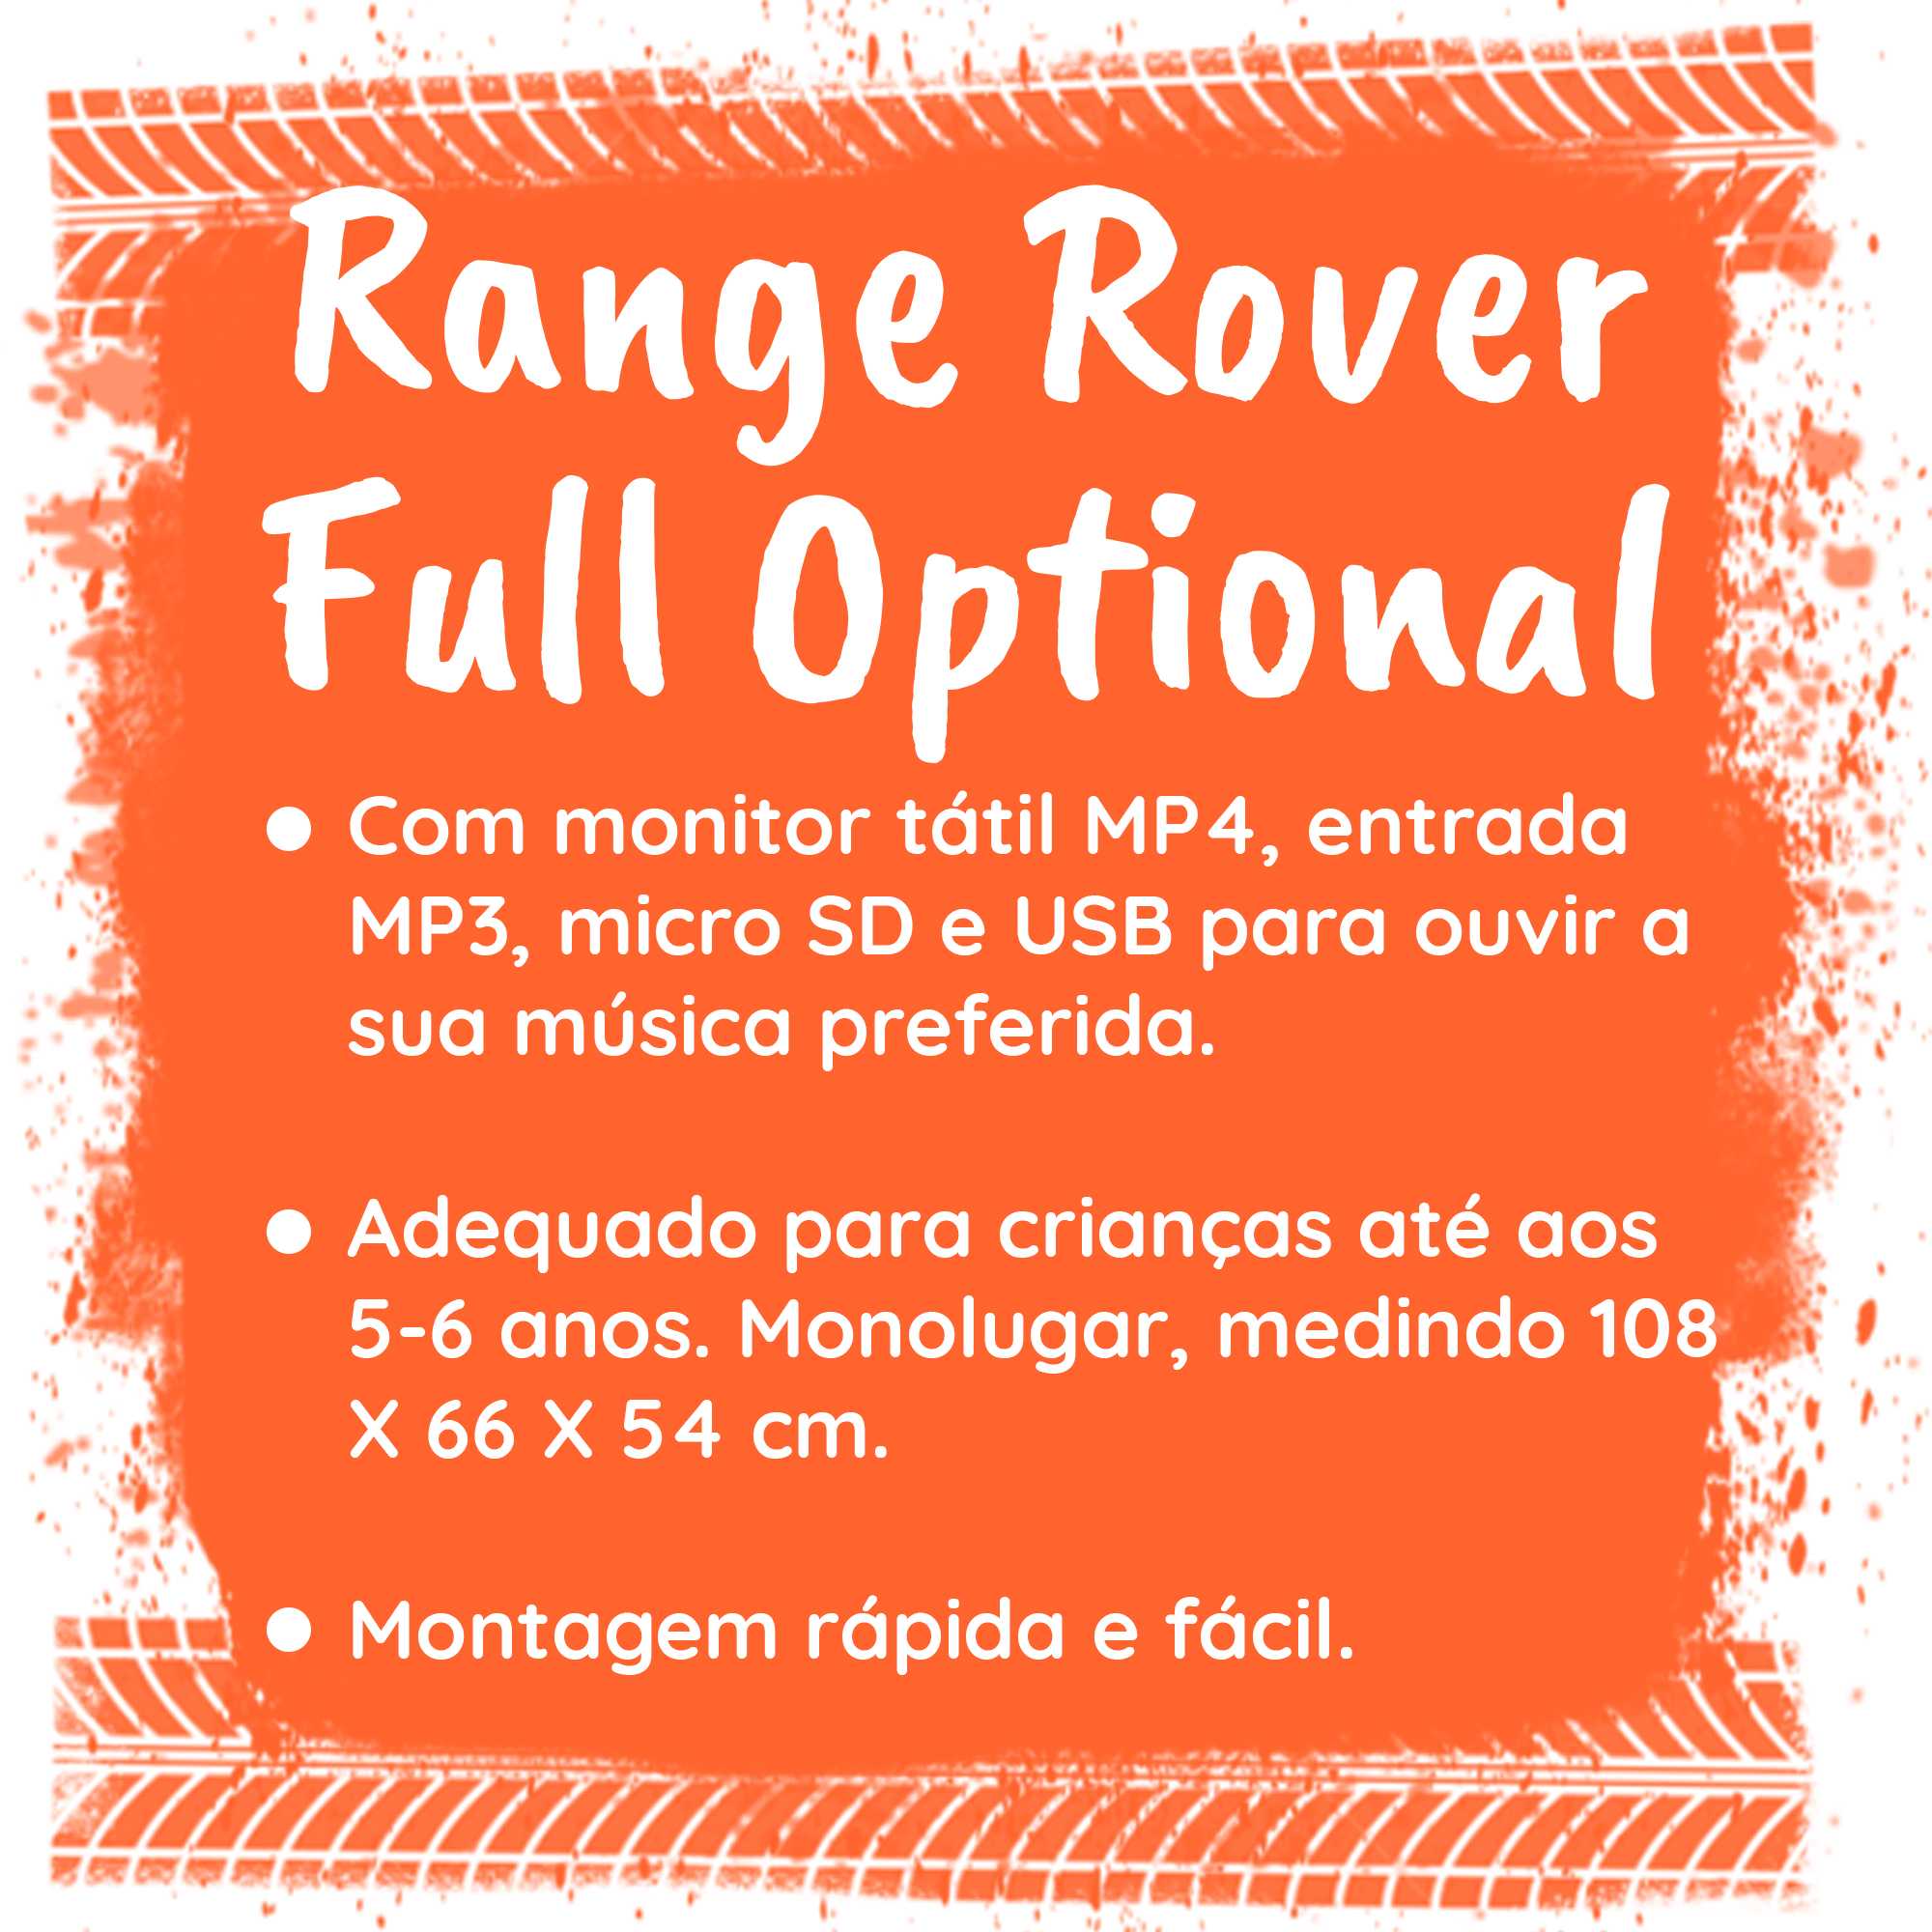 Range rover toy full opcional 